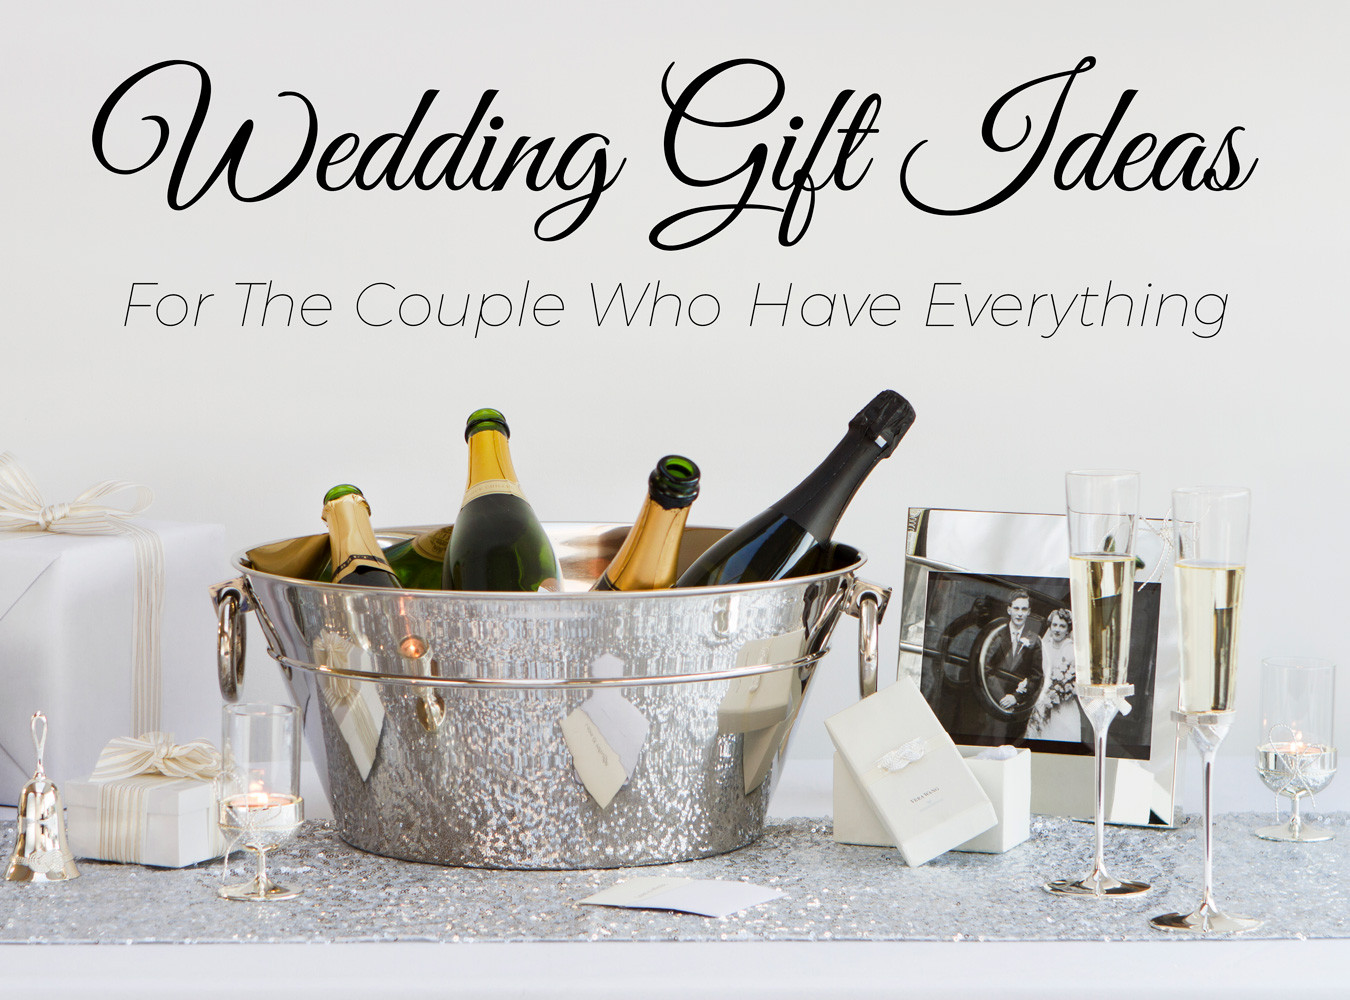 Wedding Gift Ideas For The Couple
 5 Wedding Gift Ideas for the Couple Who Have Everything